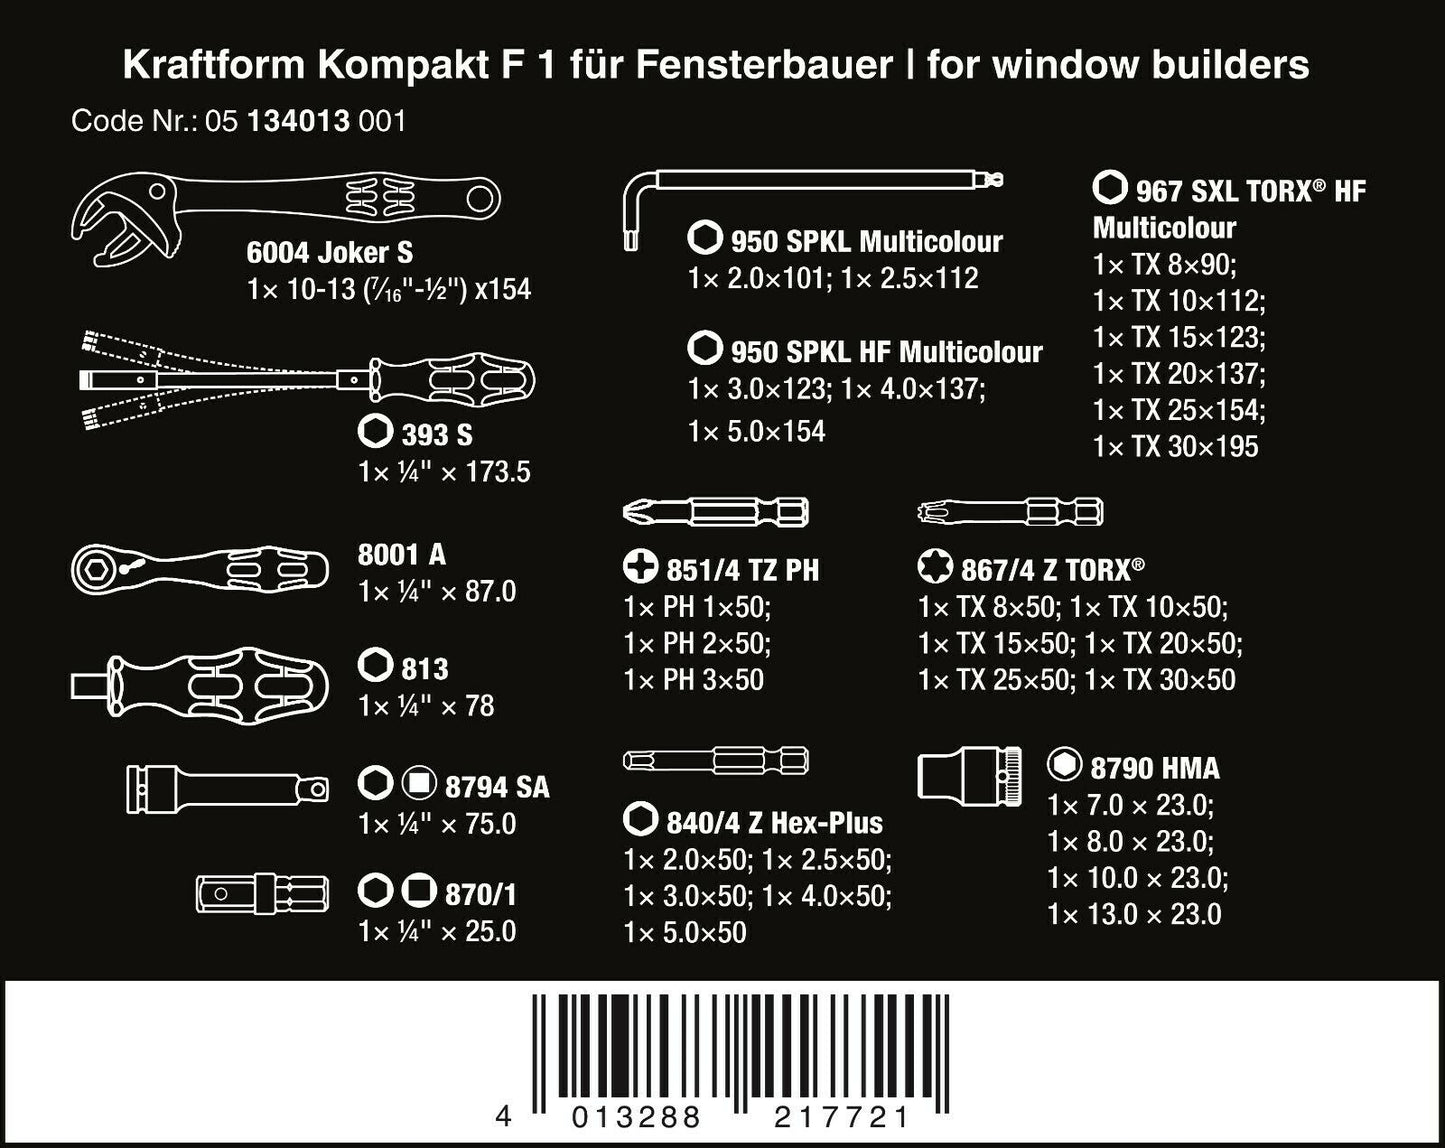 wera kraftform kompakt f 1 window installation set 35 piece 05134013001